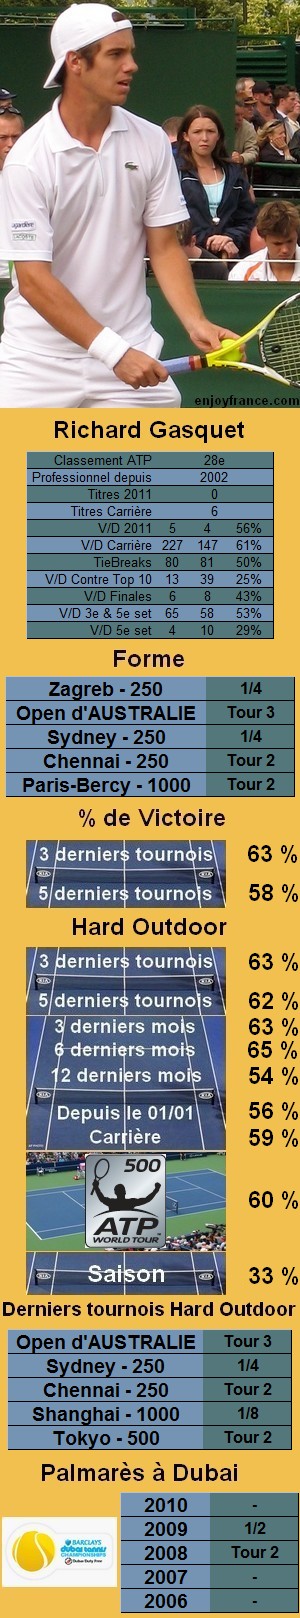 Statistiques tennis Richard Gasquet